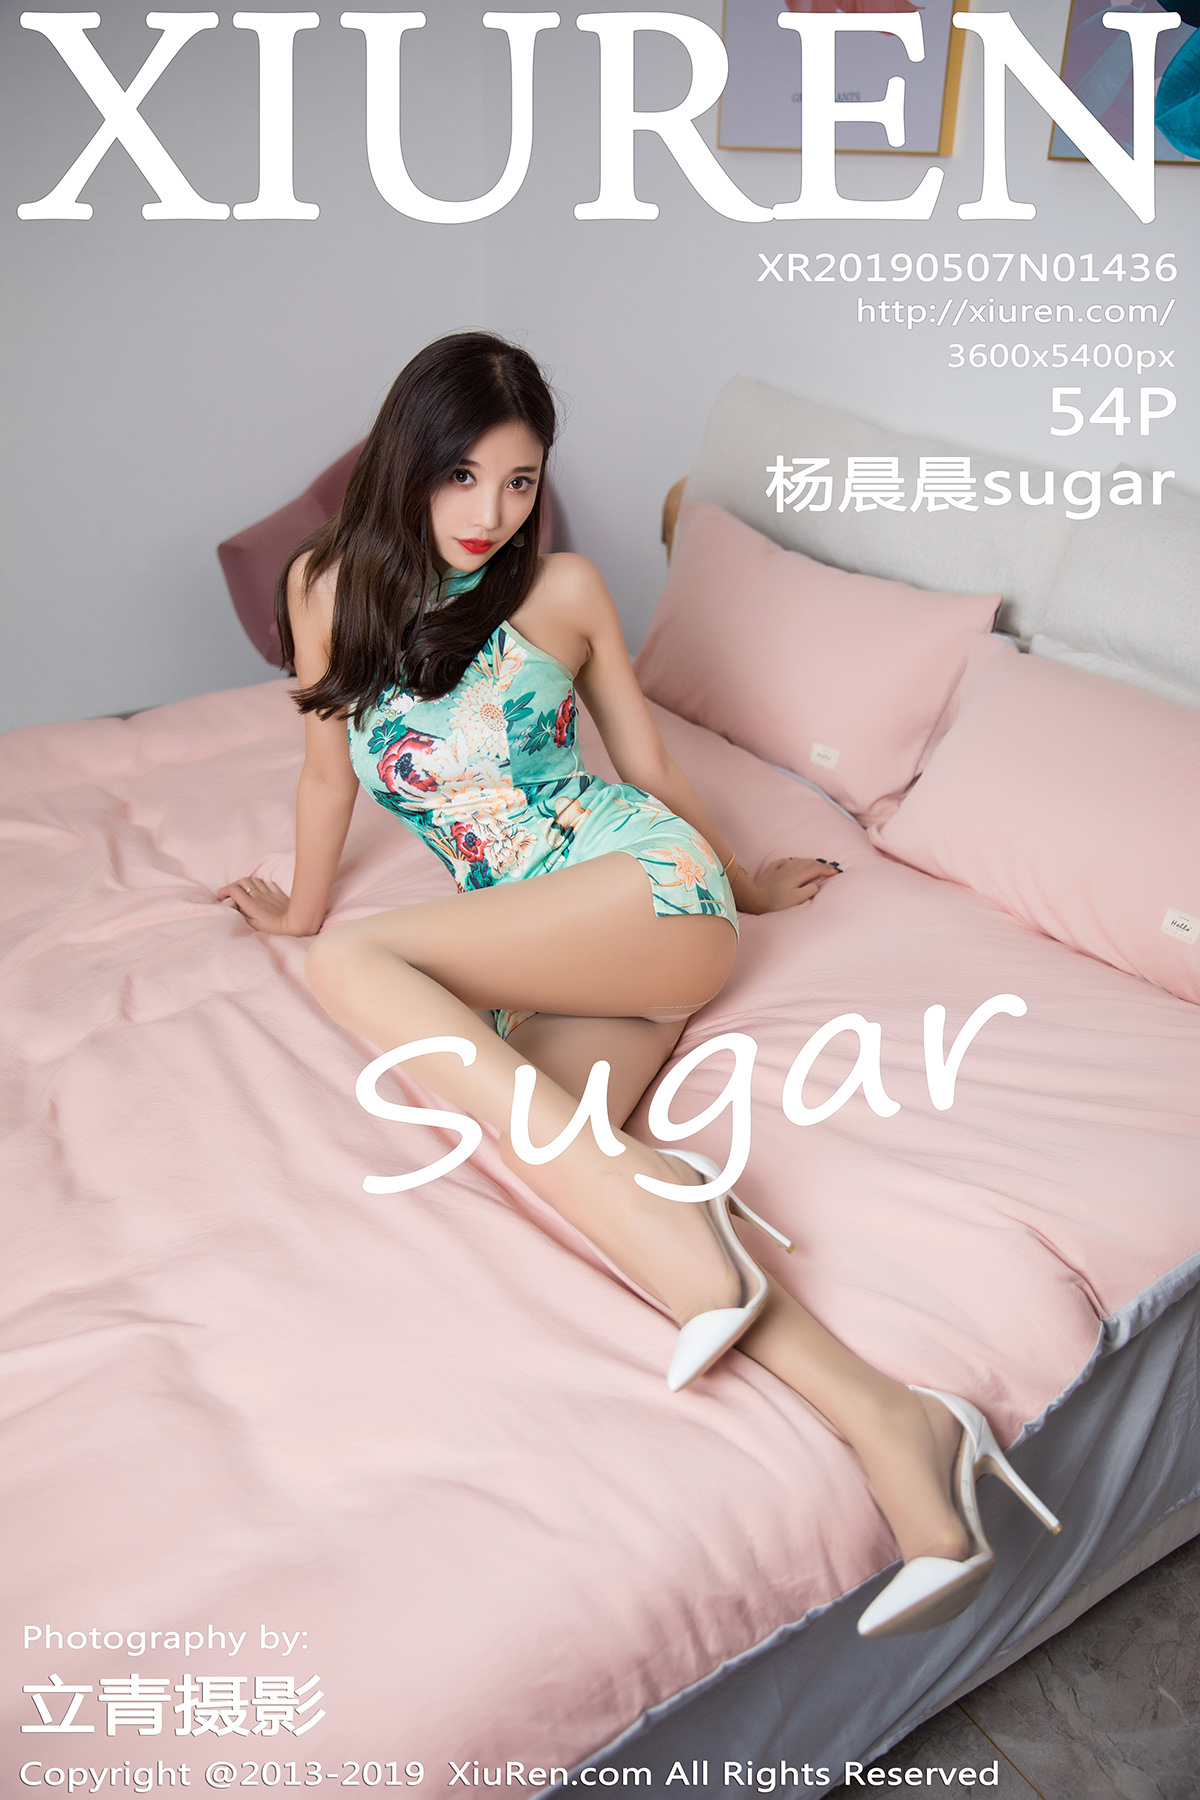 [xiuren.com] May 7, 2019 no.1436 Yang Chenchen sugar